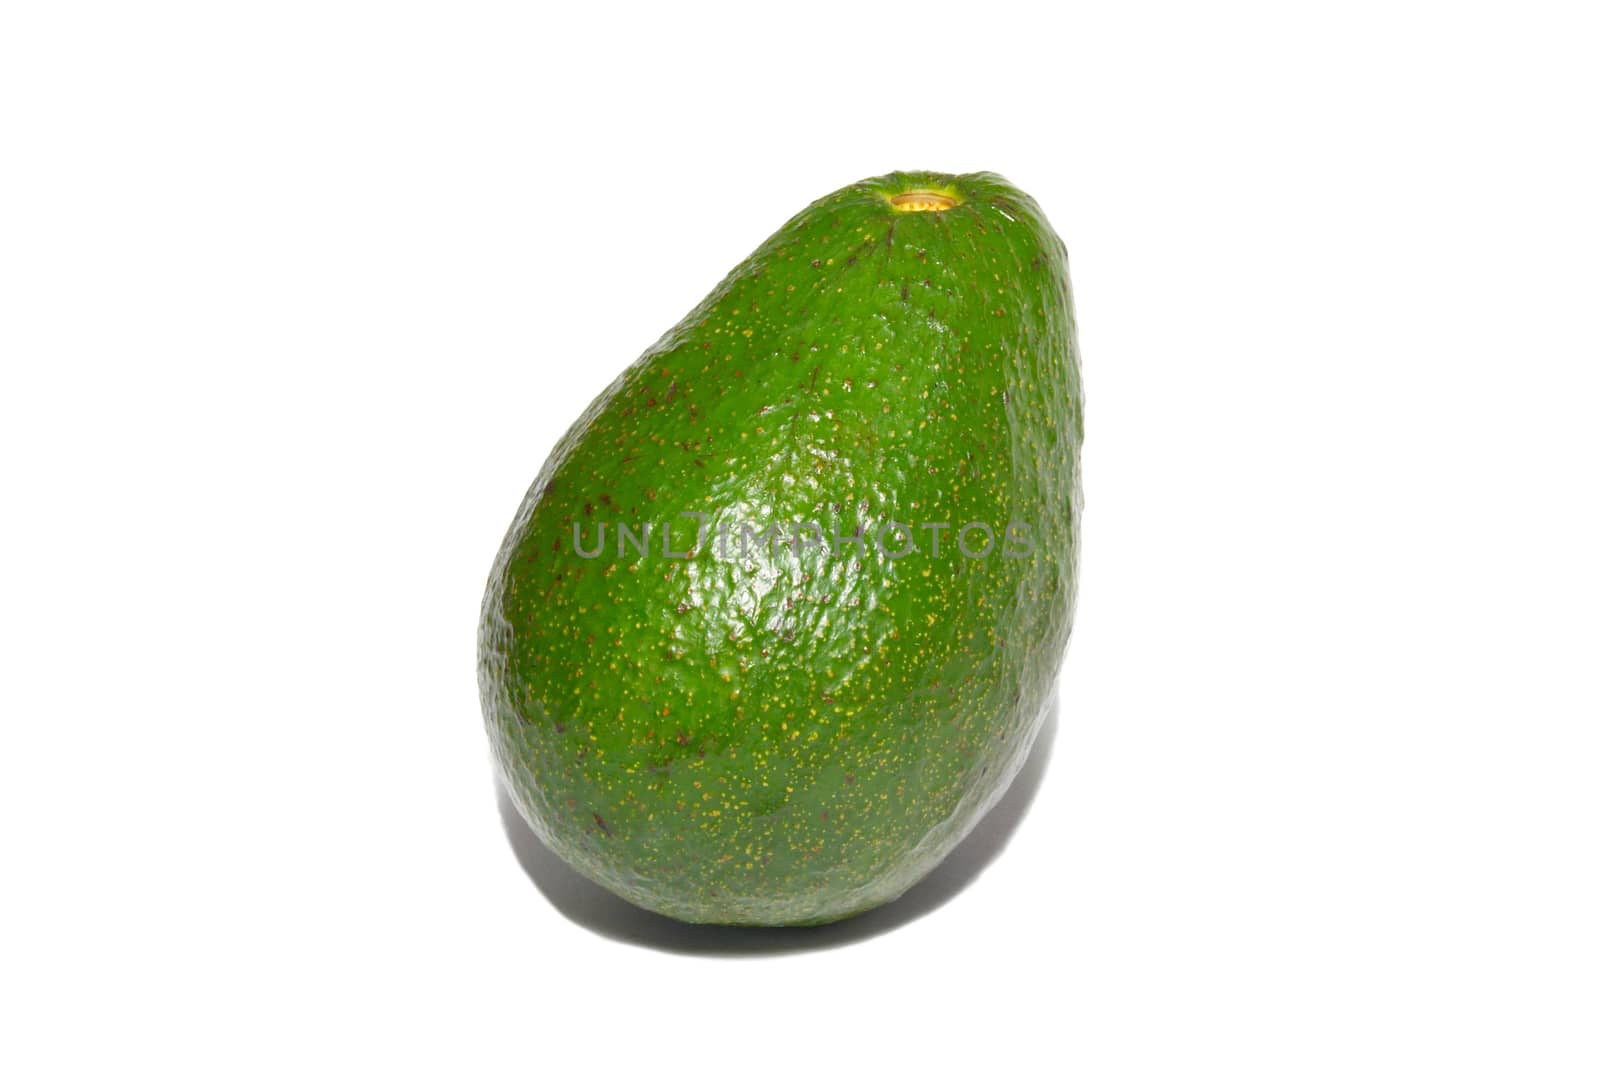 Green avocado isolated on white.